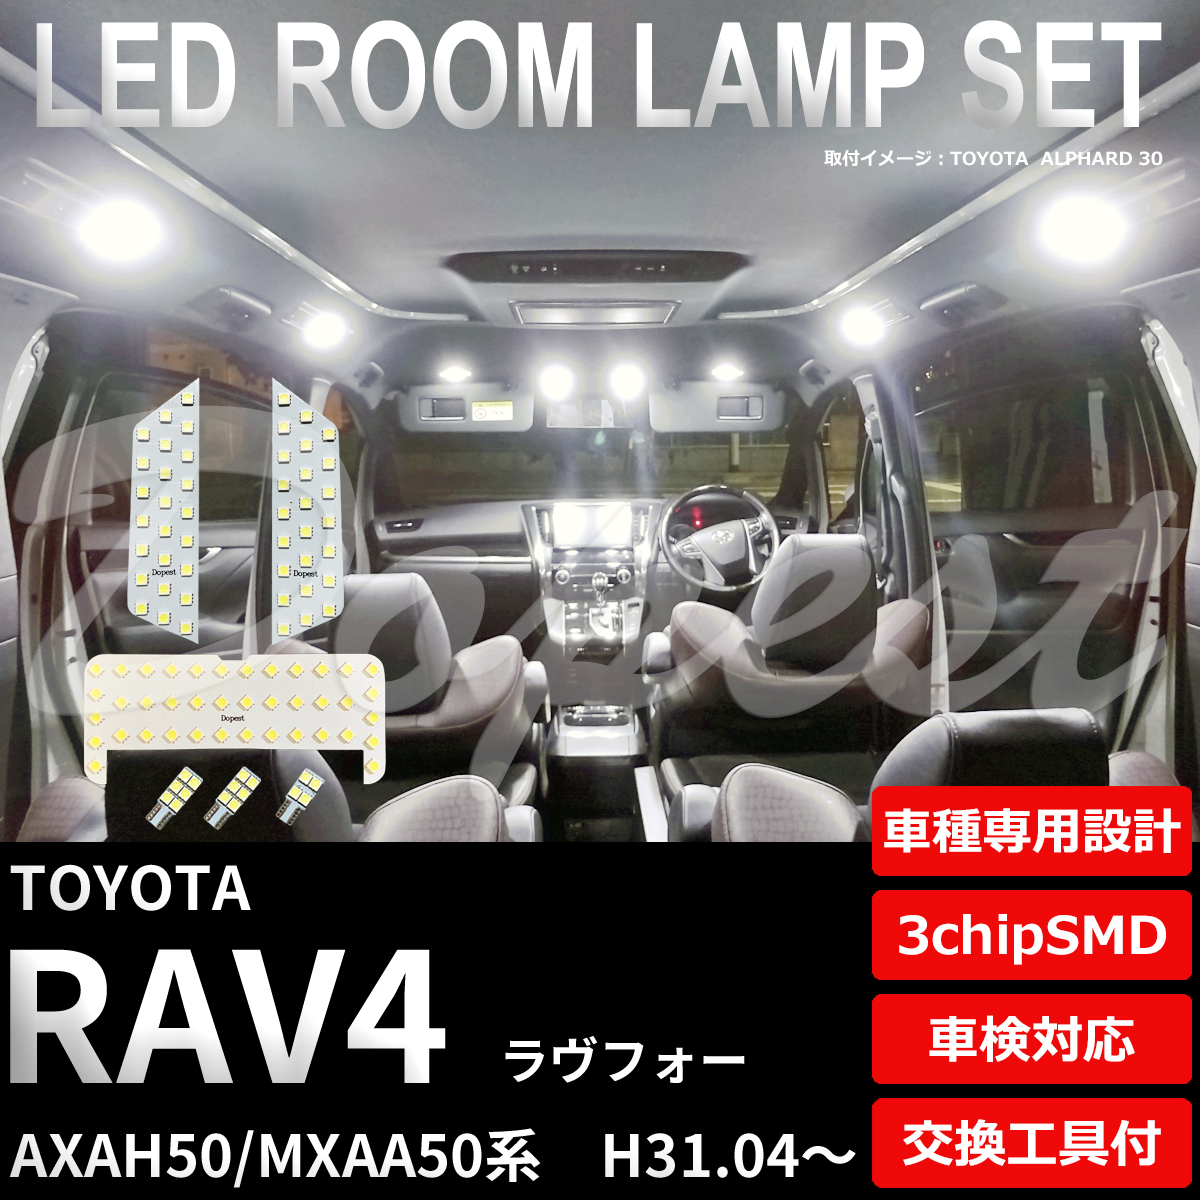 RAV4 LEDルームランプセット AXAH/MXAA50系 車内灯 室内灯